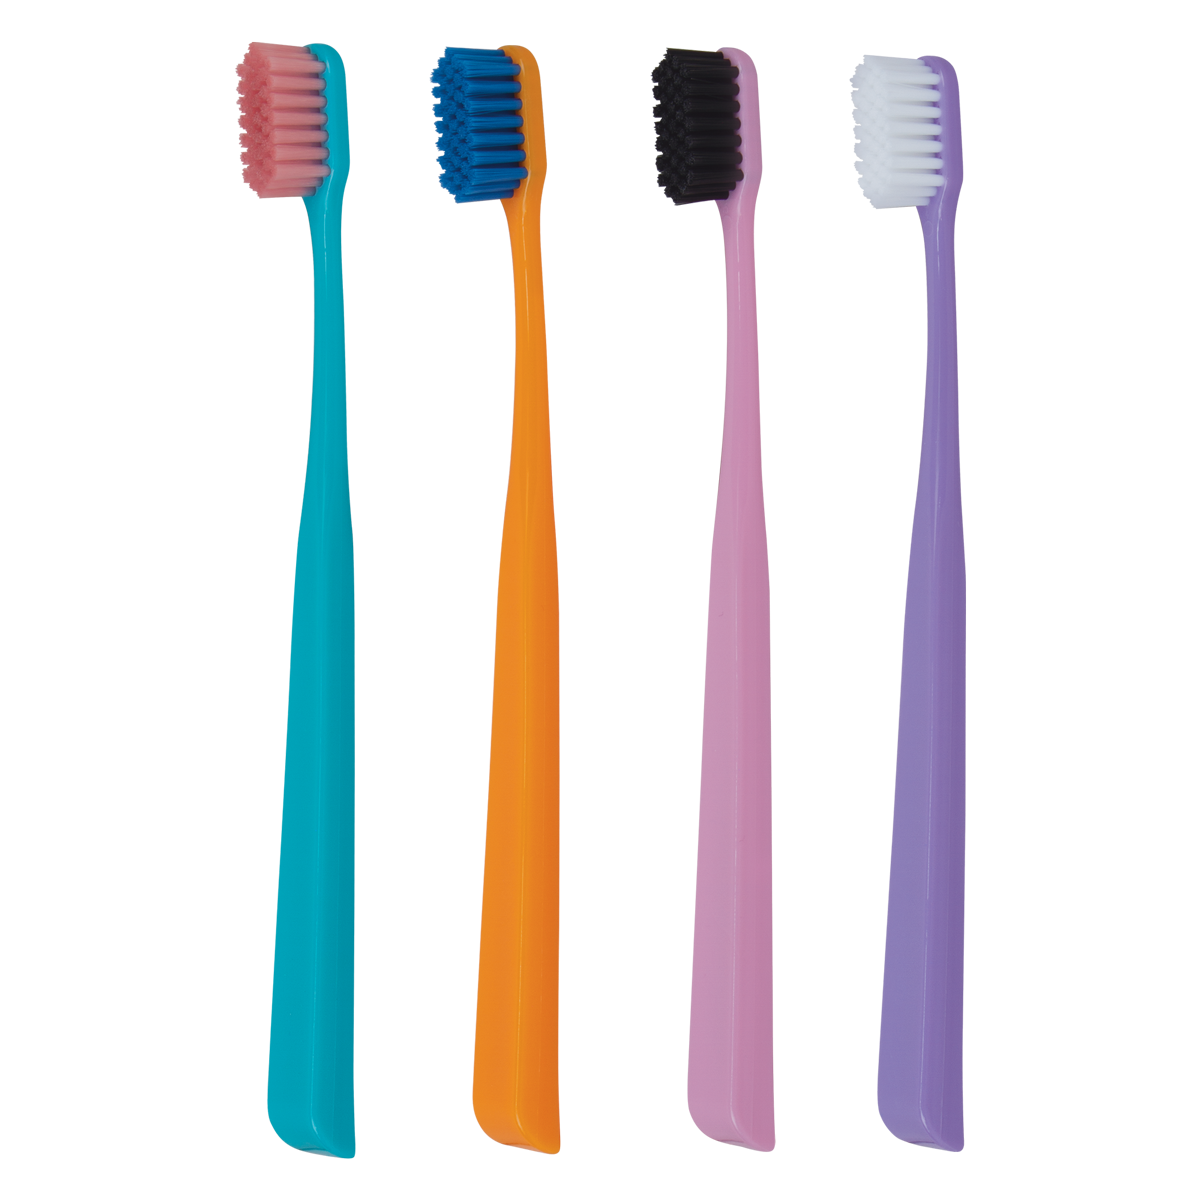 SmartSmile Adult Toothbrush Colors